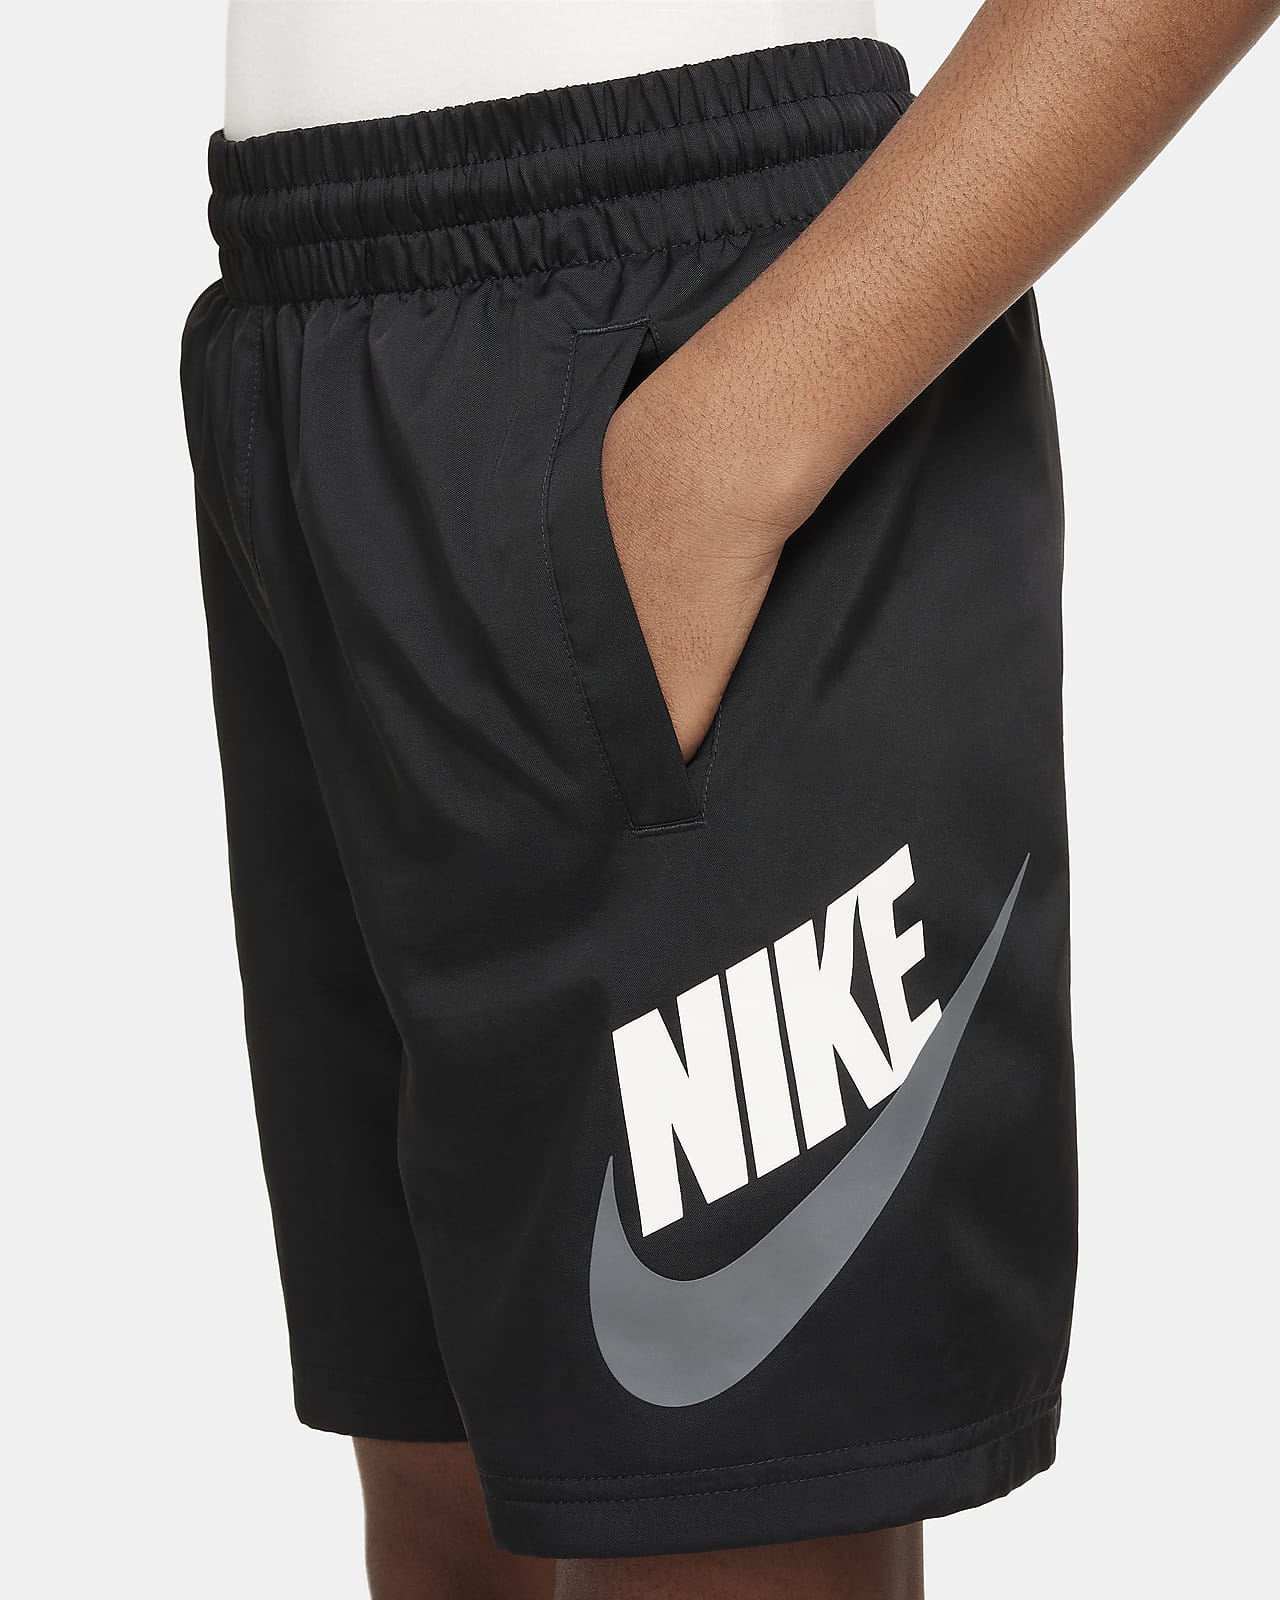 Girls Shorts. Nike PH